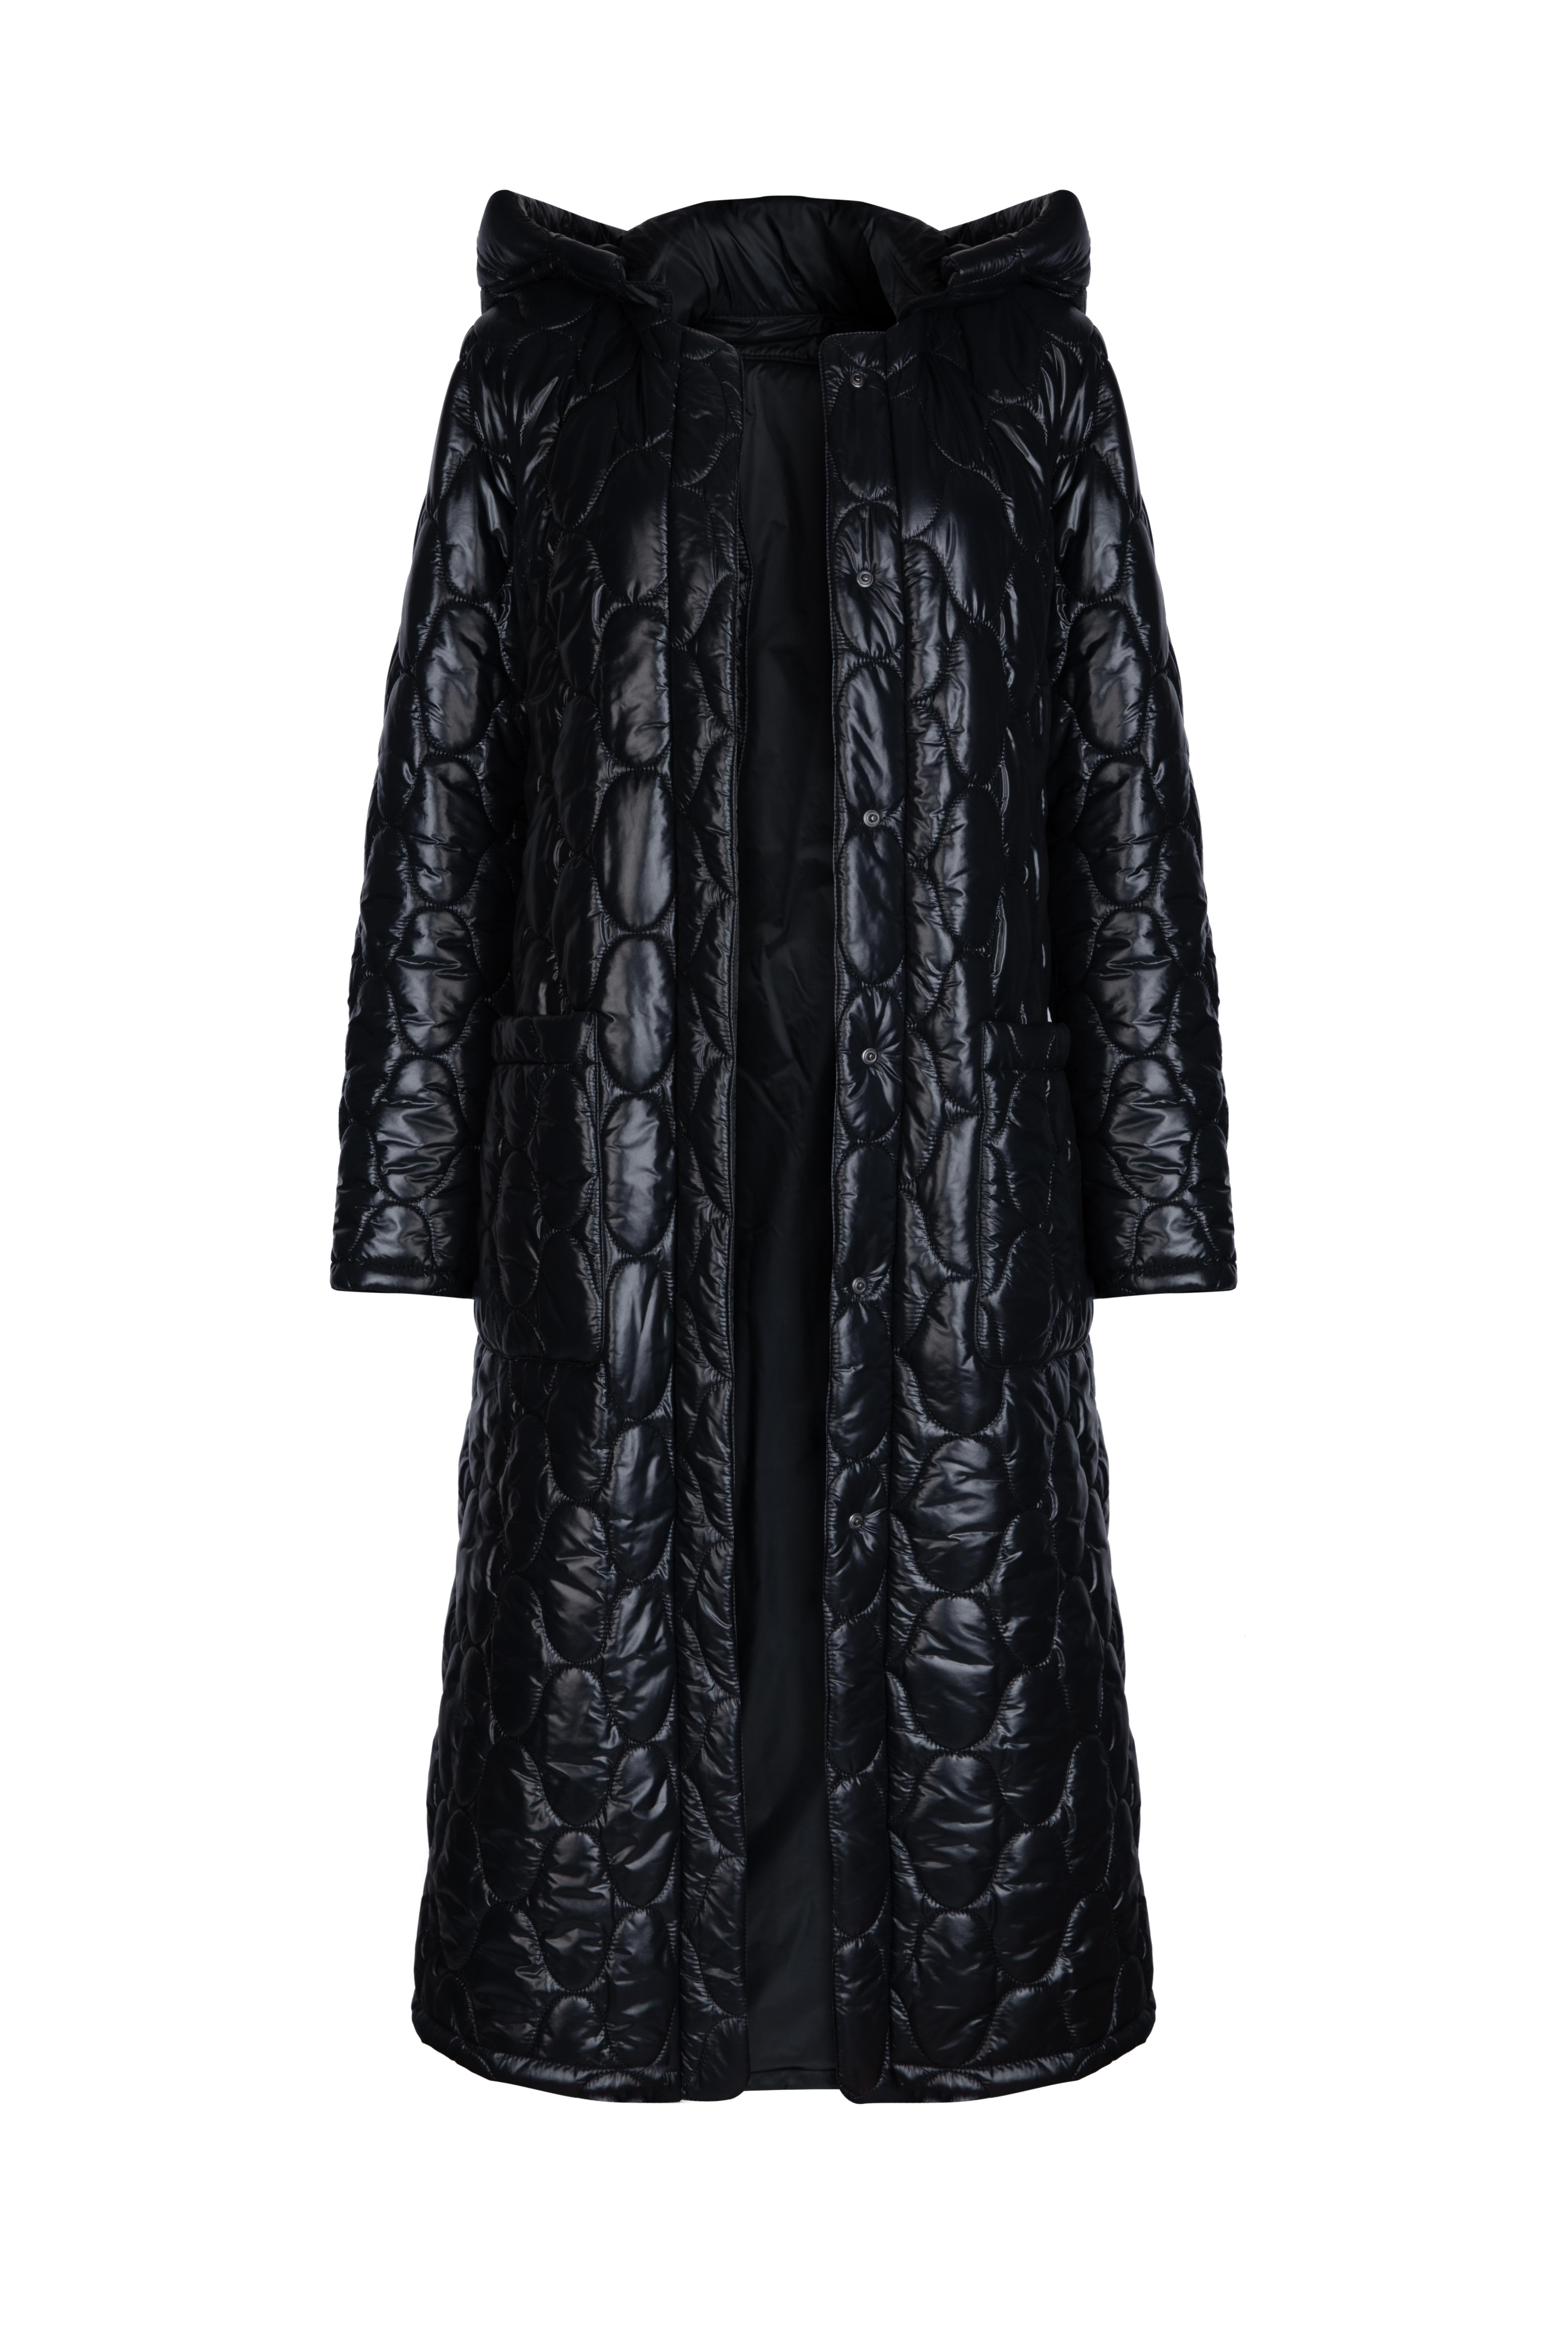 Verheyen London Aurora Quilted Coat with detachable hood - Size uk 14 For Sale 4